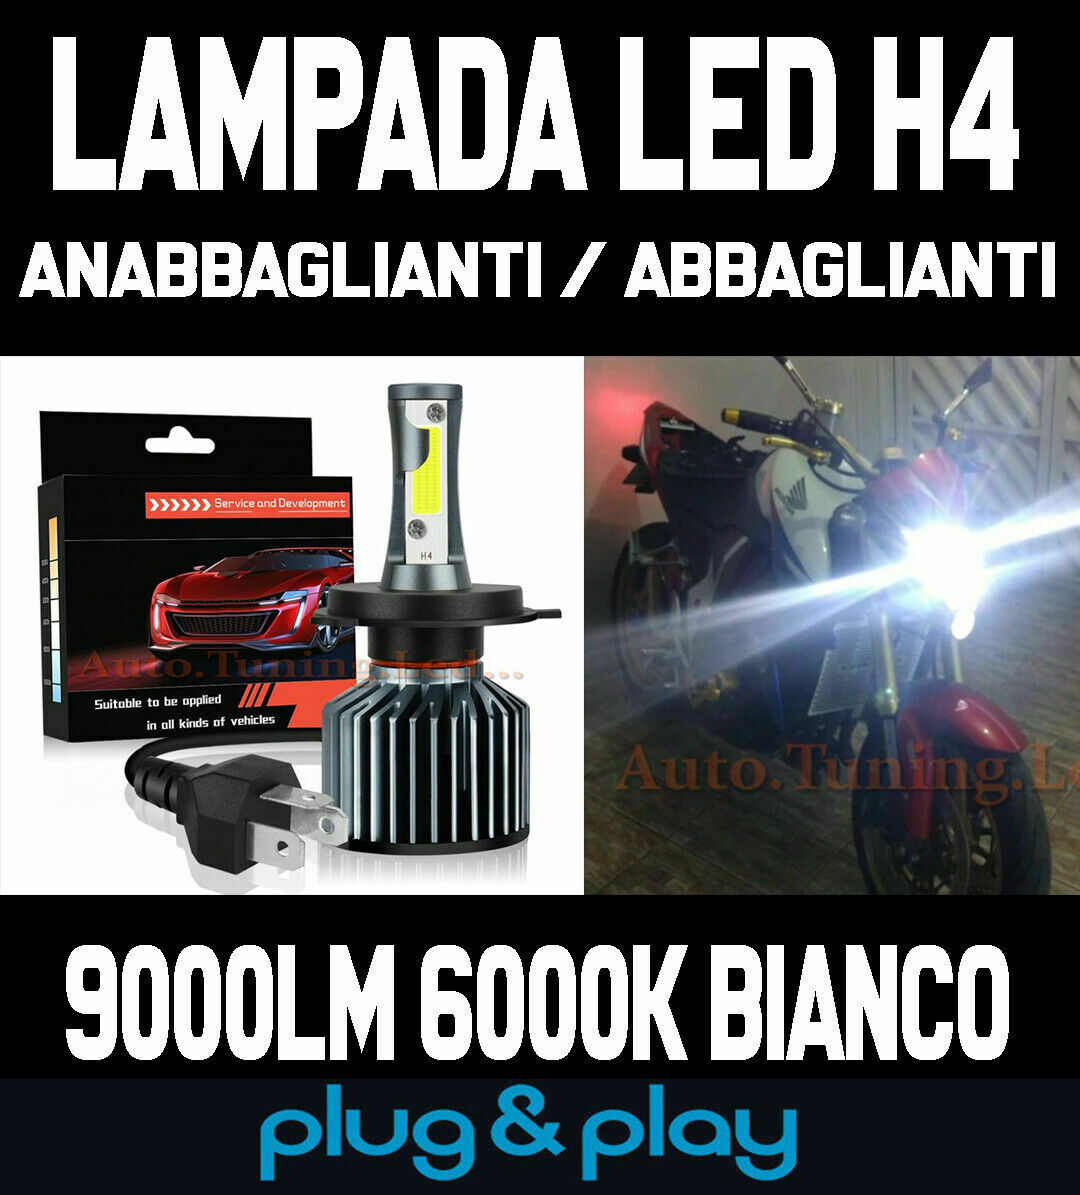 YAMAHA YZF 1000 LAMPADA LED H4 6000K CANBUS 9000LM ANABBAGLIANTI ABBAGLIANTI